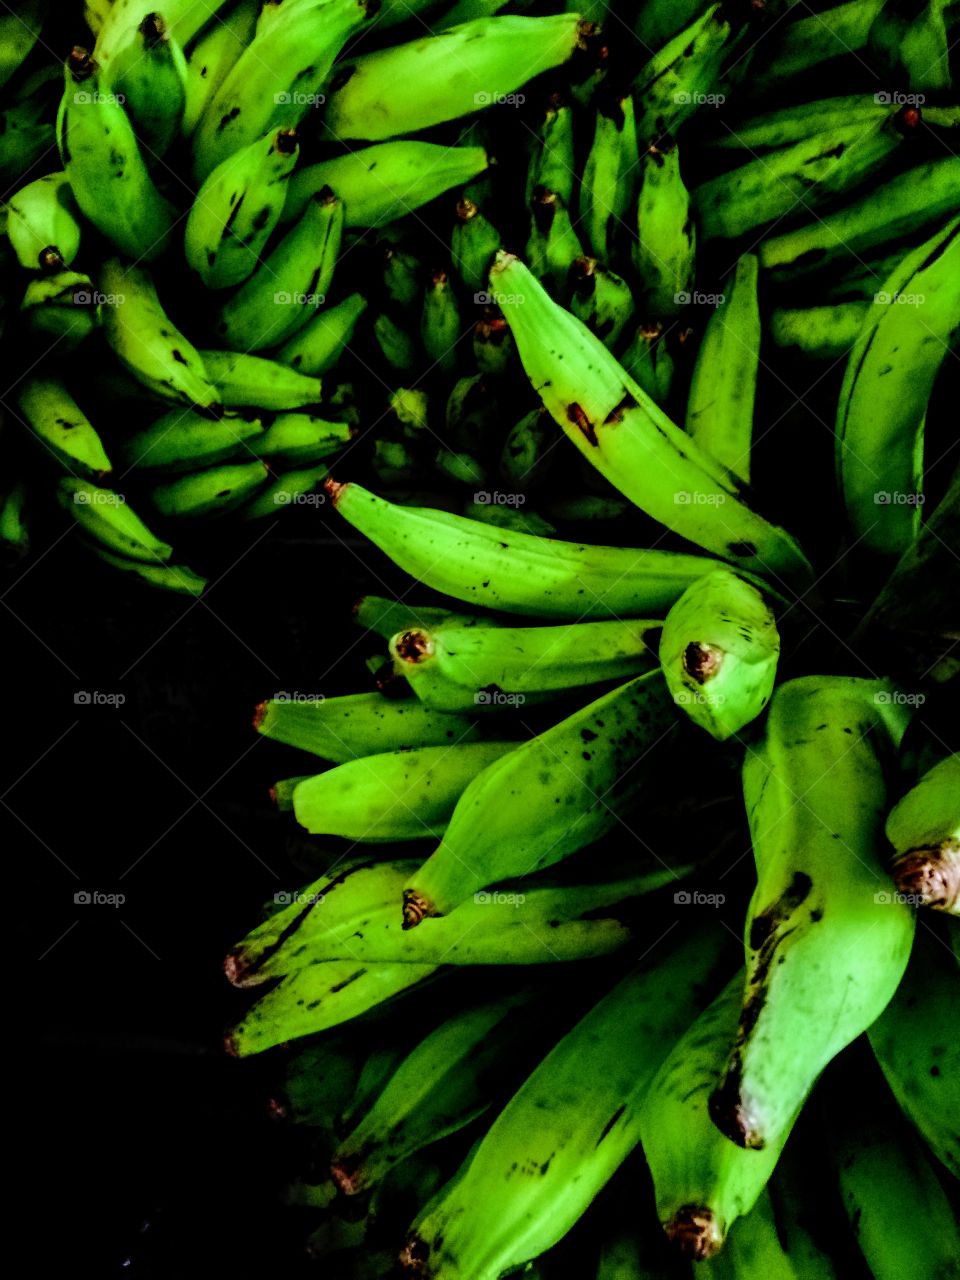 Green plantain bunch